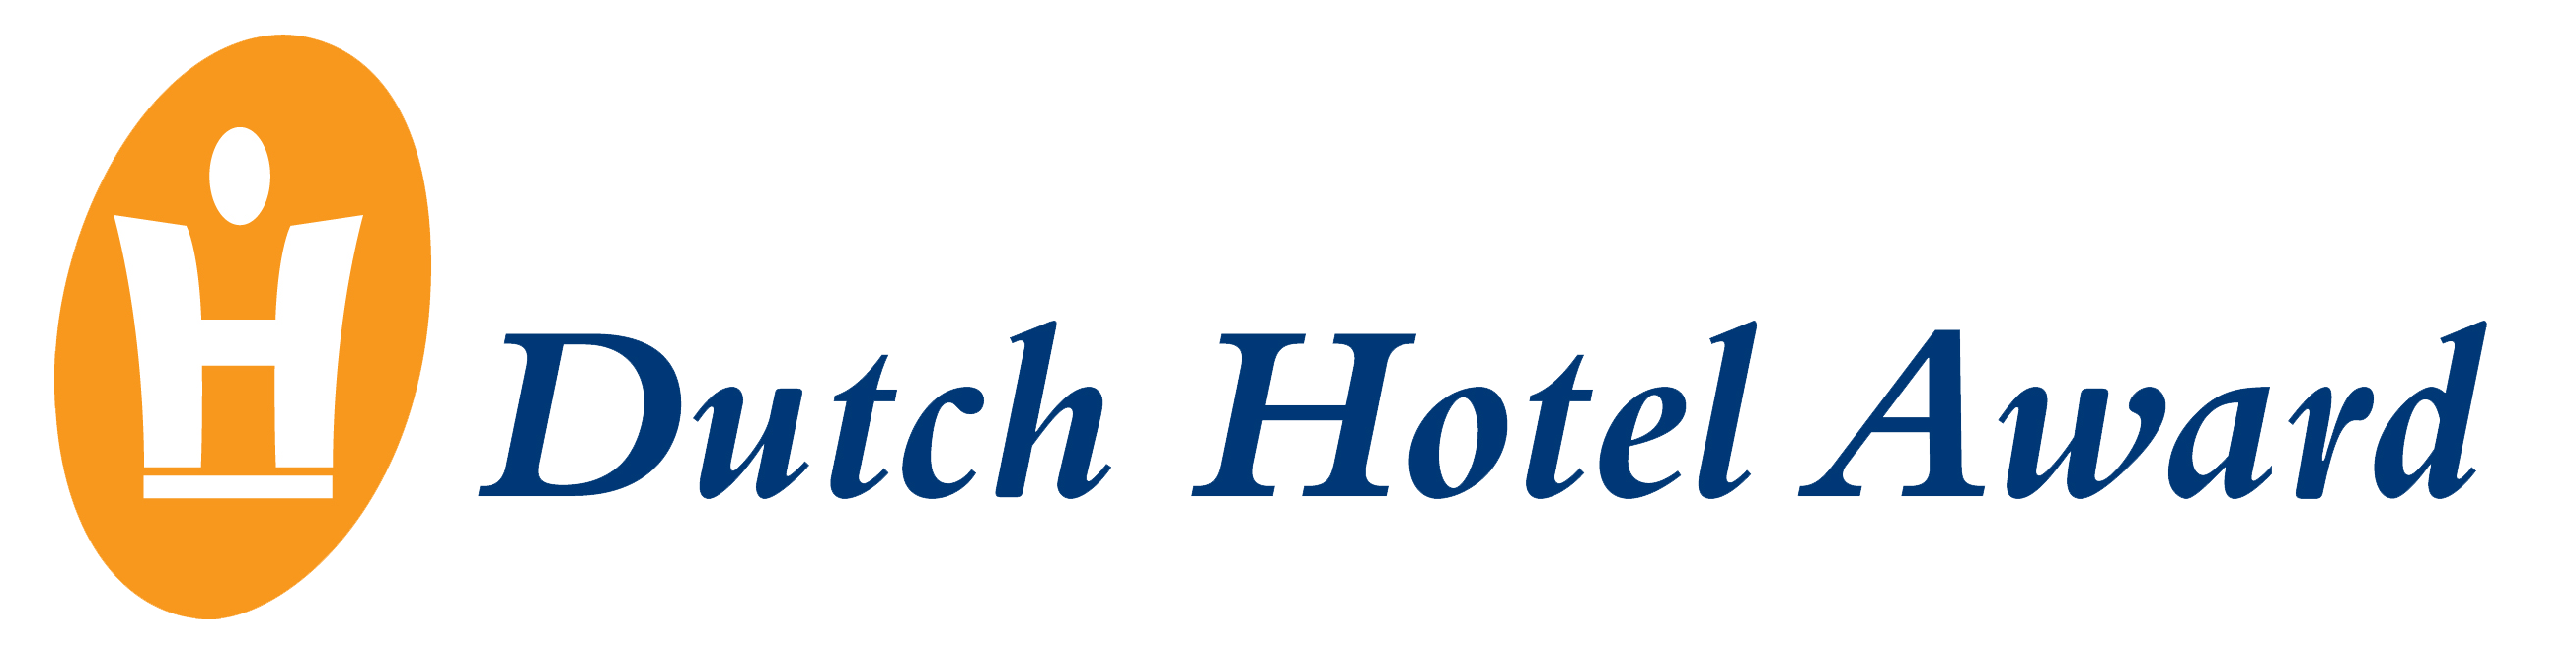 Dutch Hotel Award